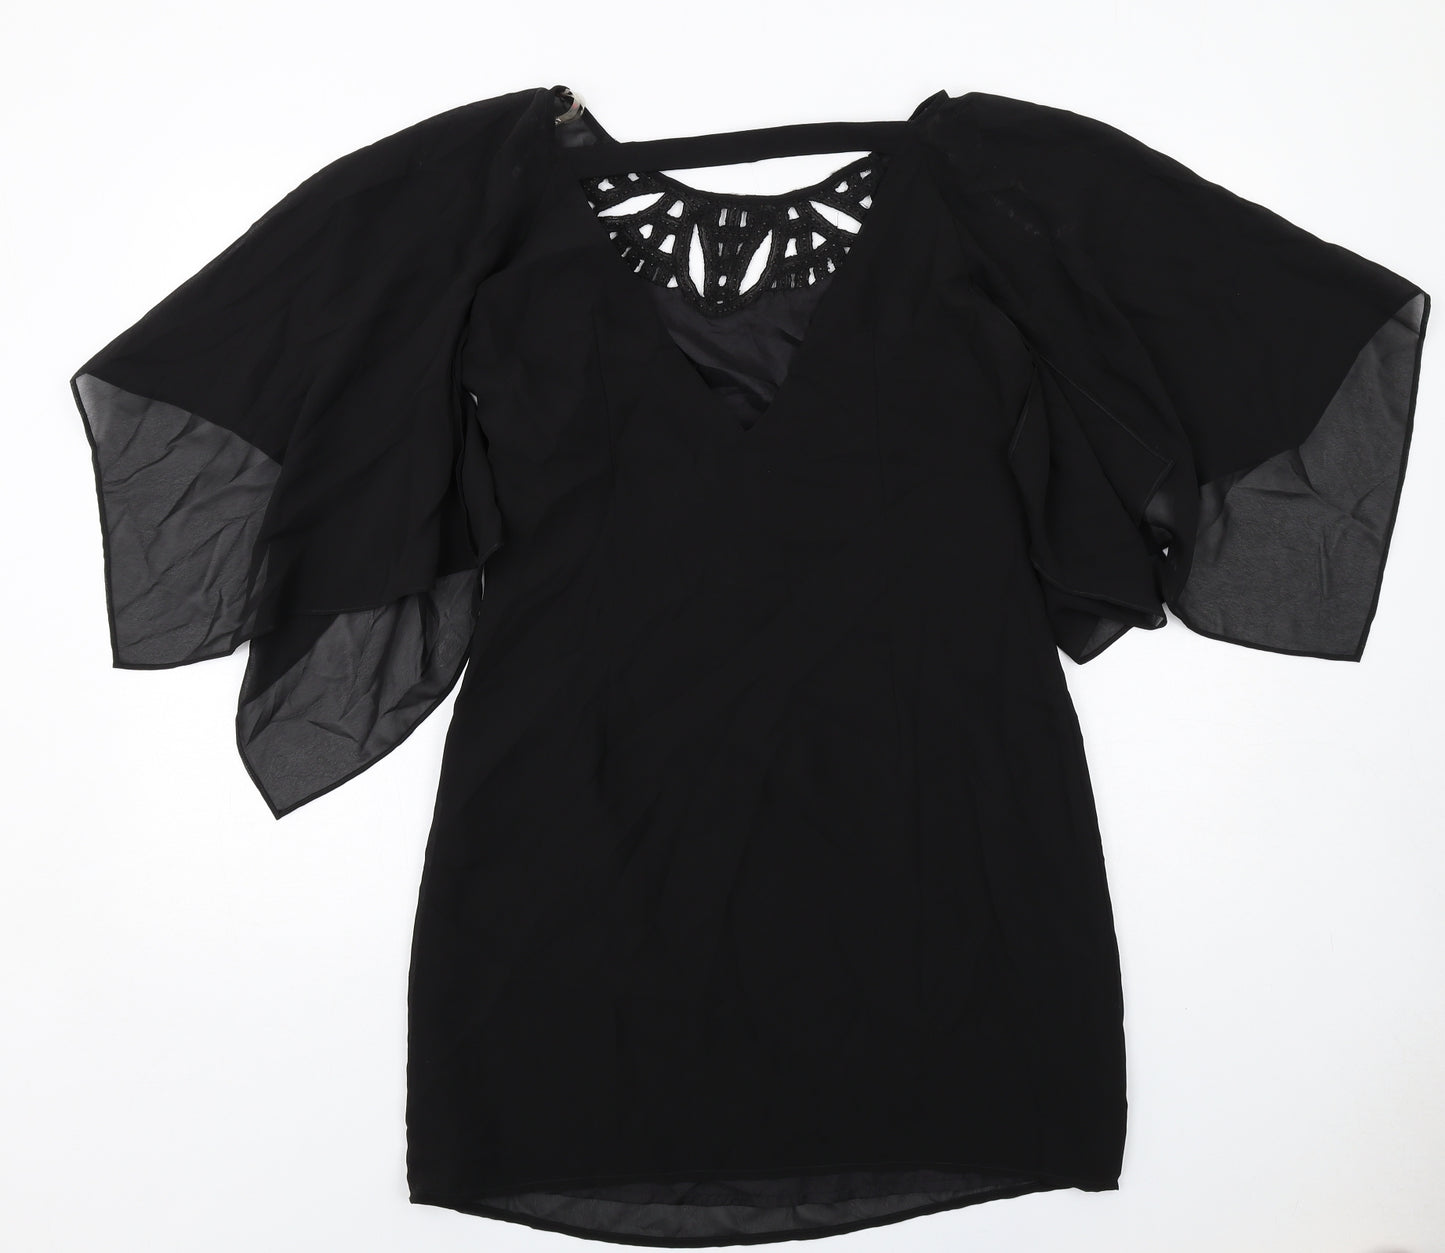 Lipsy Womens Black Polyester Mini Size 8 Boat Neck Zip - Embellished Neckline